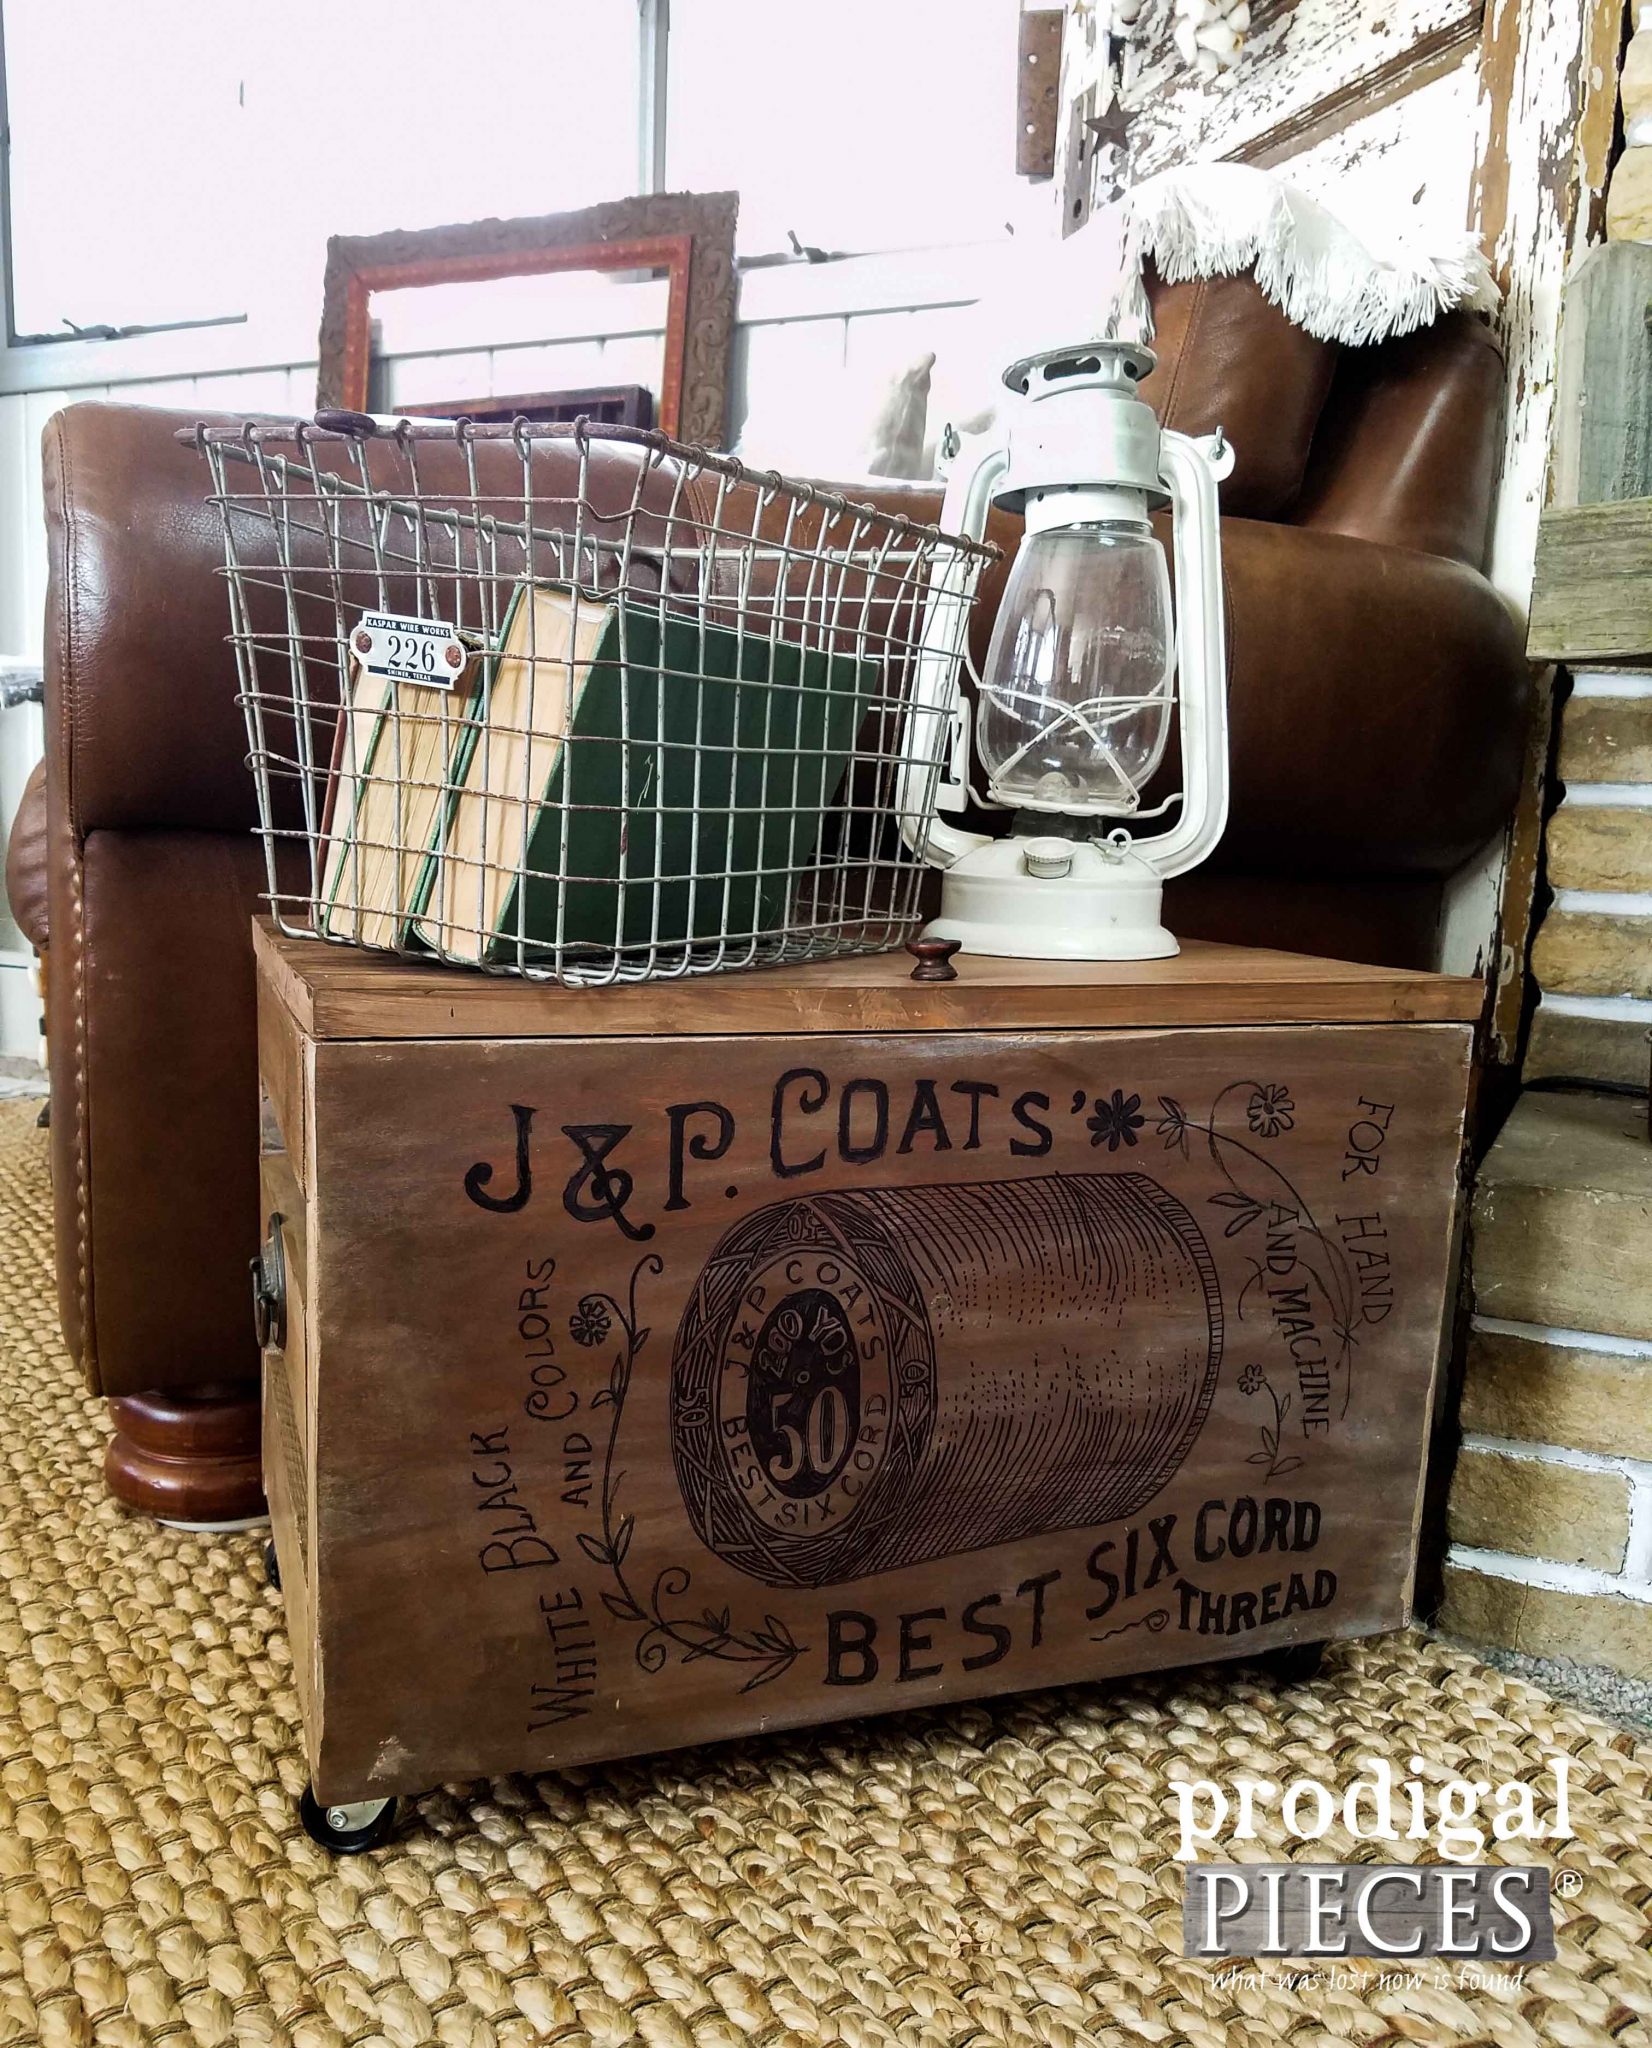 J & P Coats Thread Repurposed Cabinet Door Crate DIY by Prodigal Pieces | prodigalpieces.com